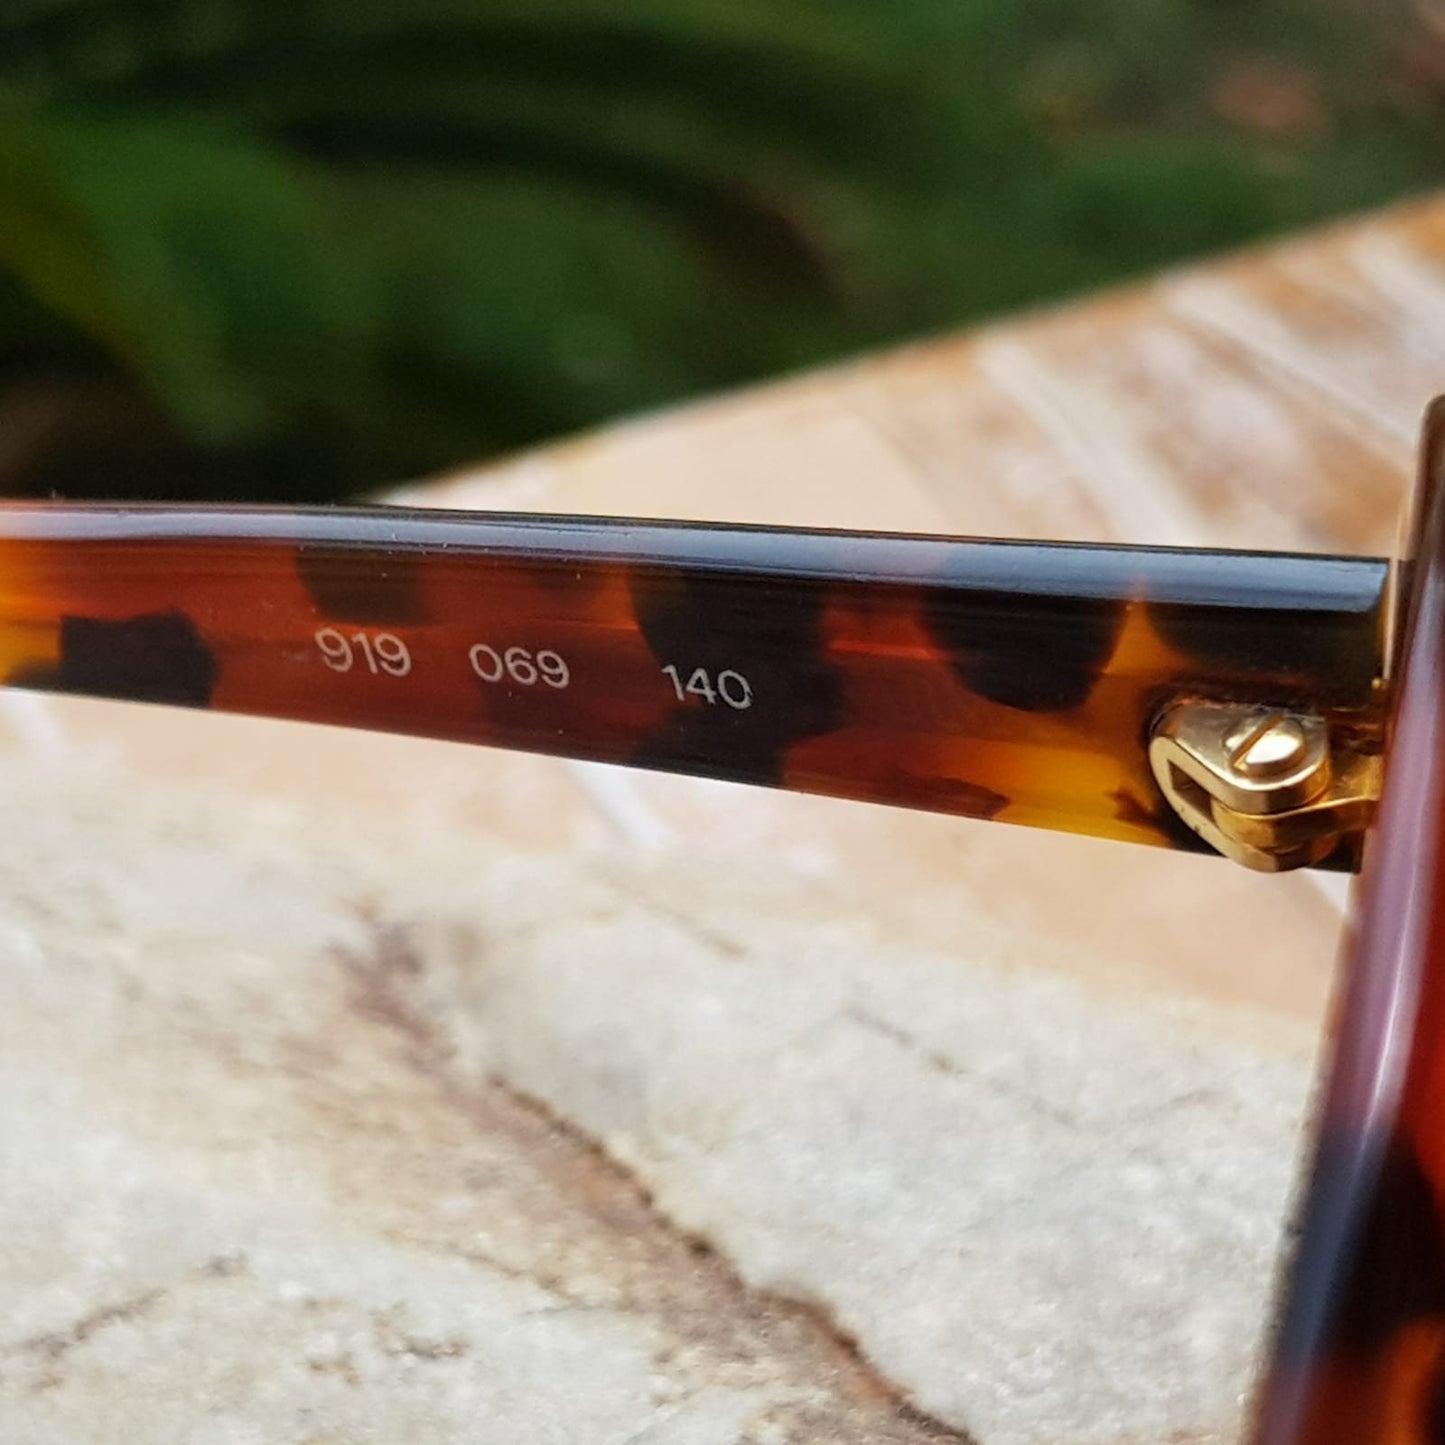 Giorgio Armani sunglasses round lens vtg 80s 90s oversize